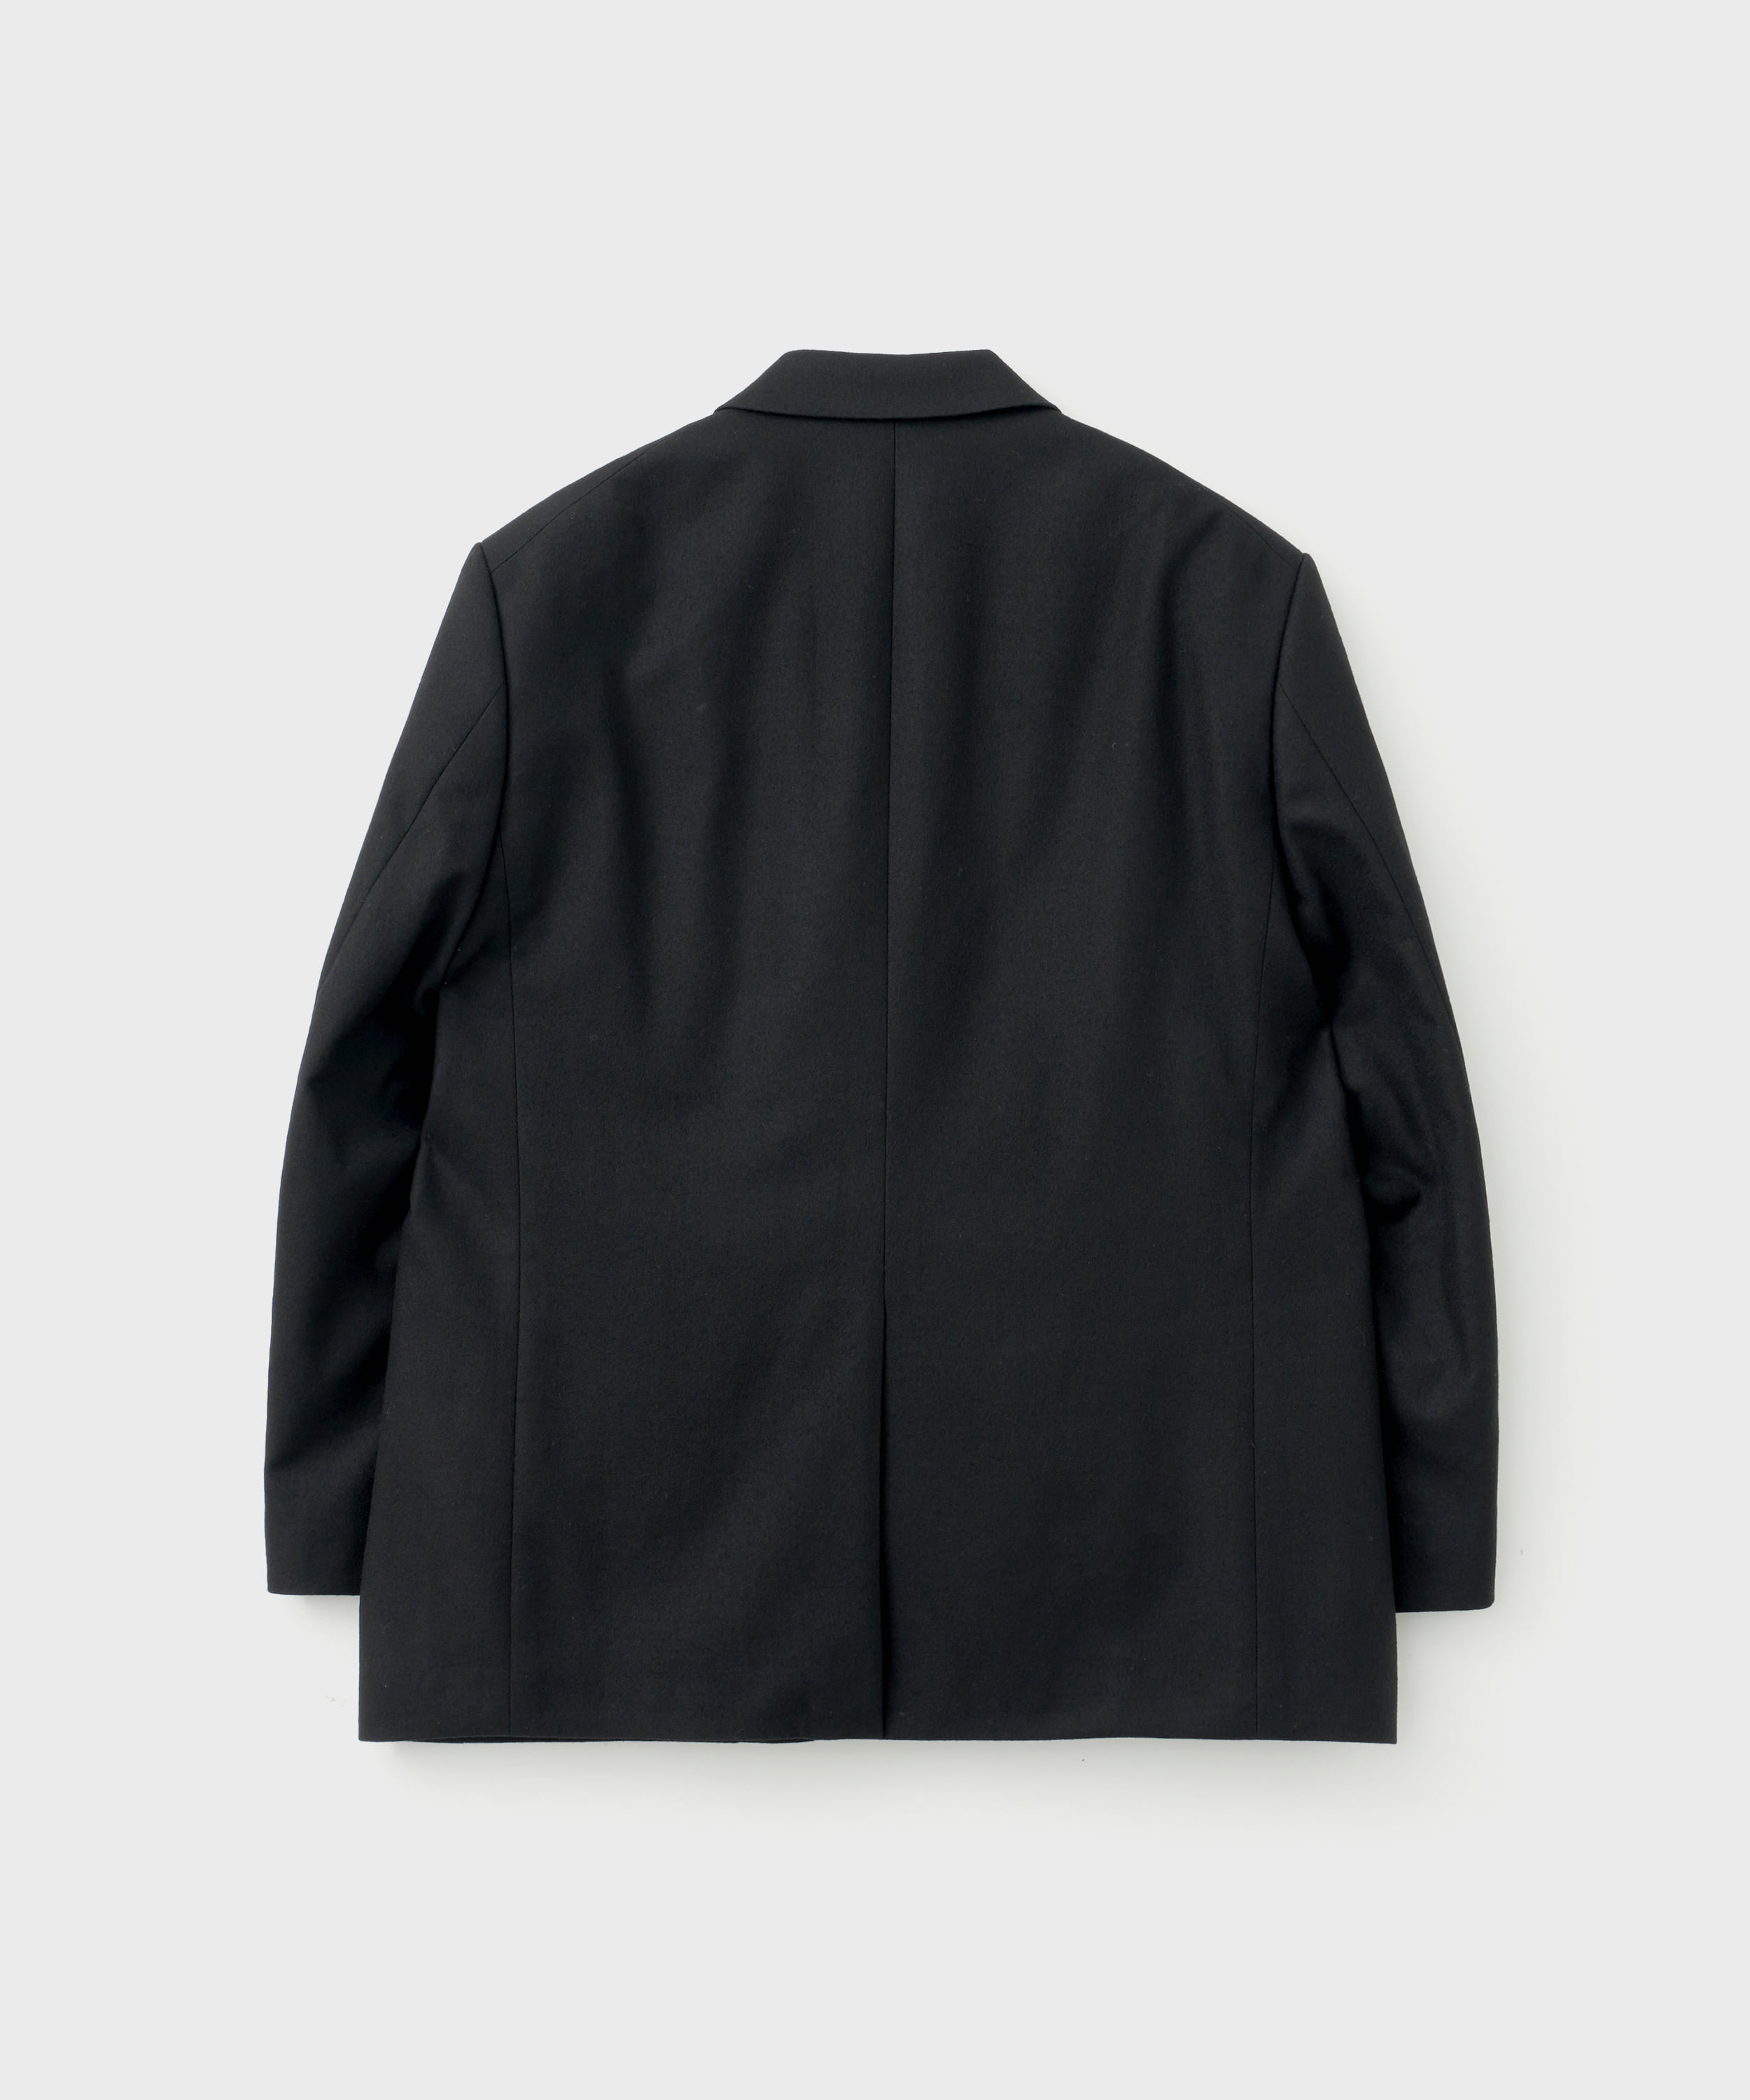 Tailored Square Jacket (Black)